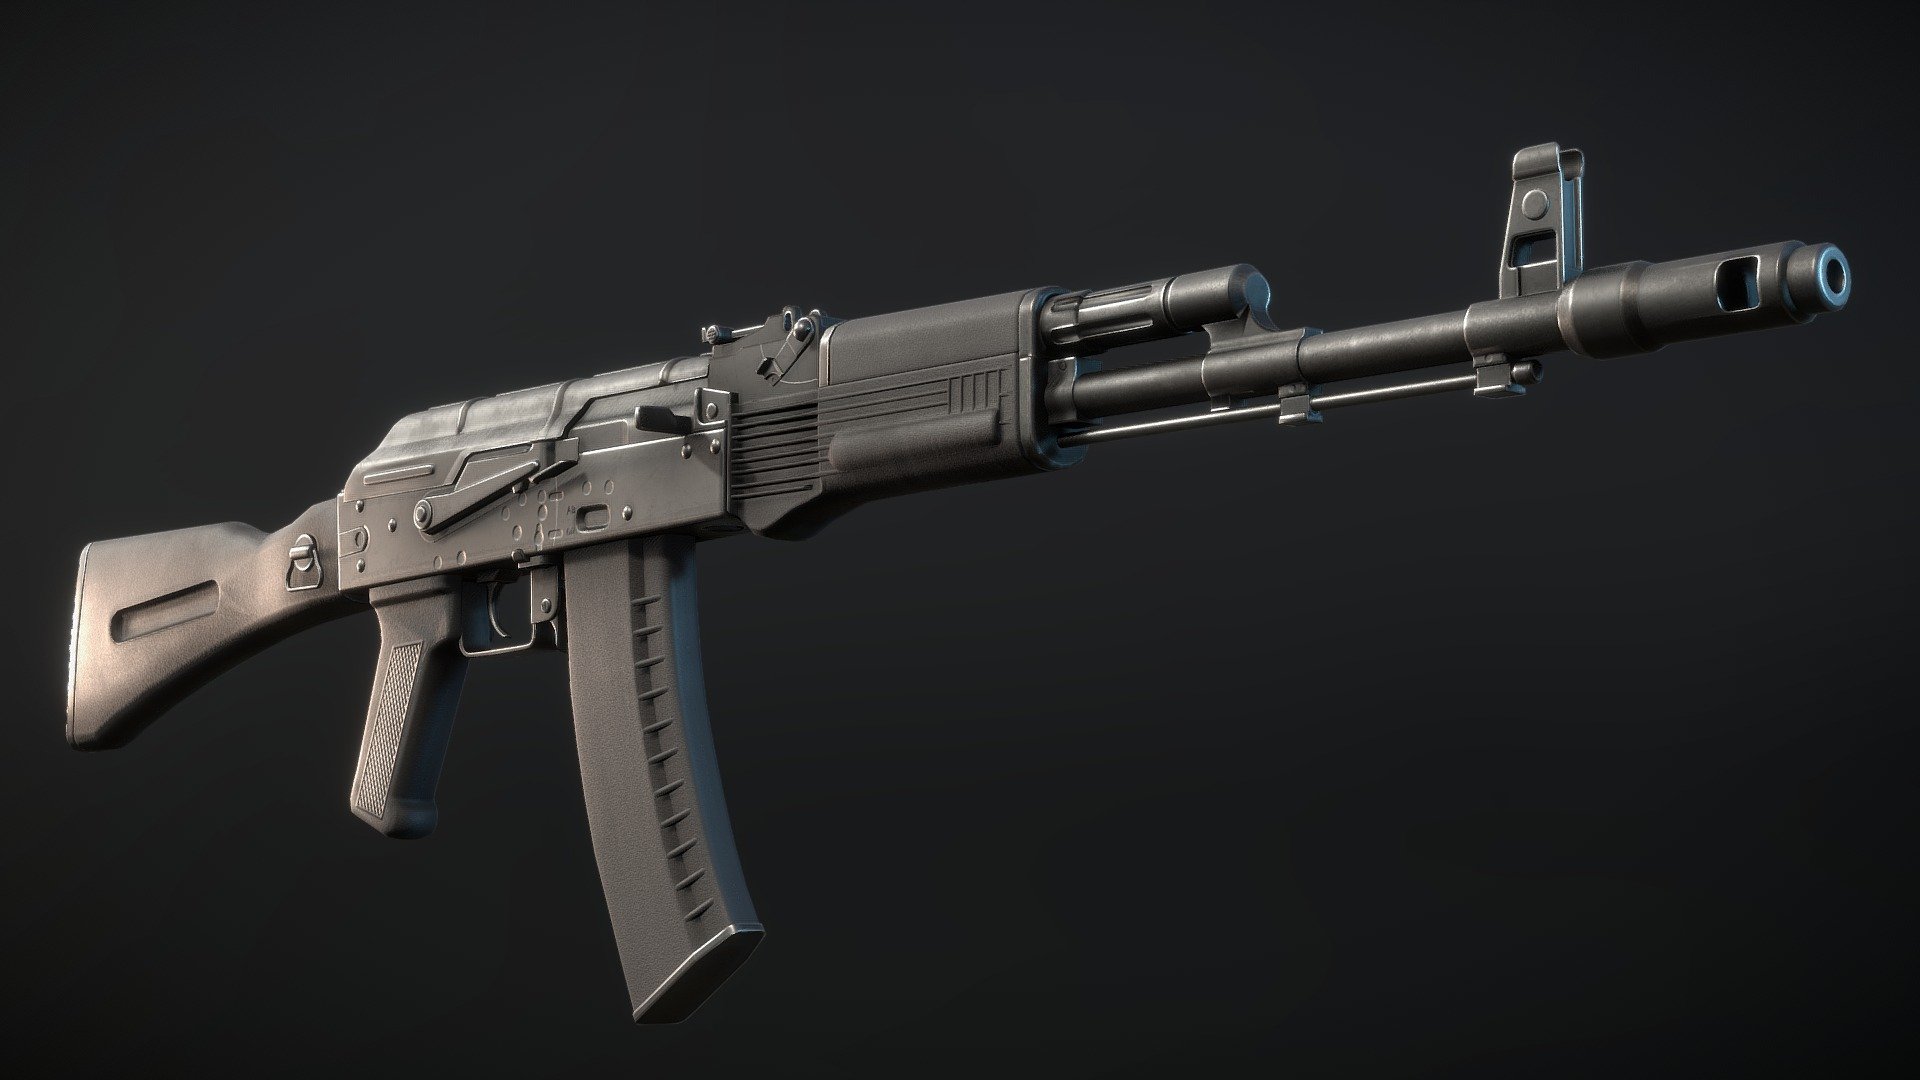 The AK-74 (Russian: Автомат Калашникова образца 1974 года or &ldquo;Kalashnikov automatic rifle model 1974